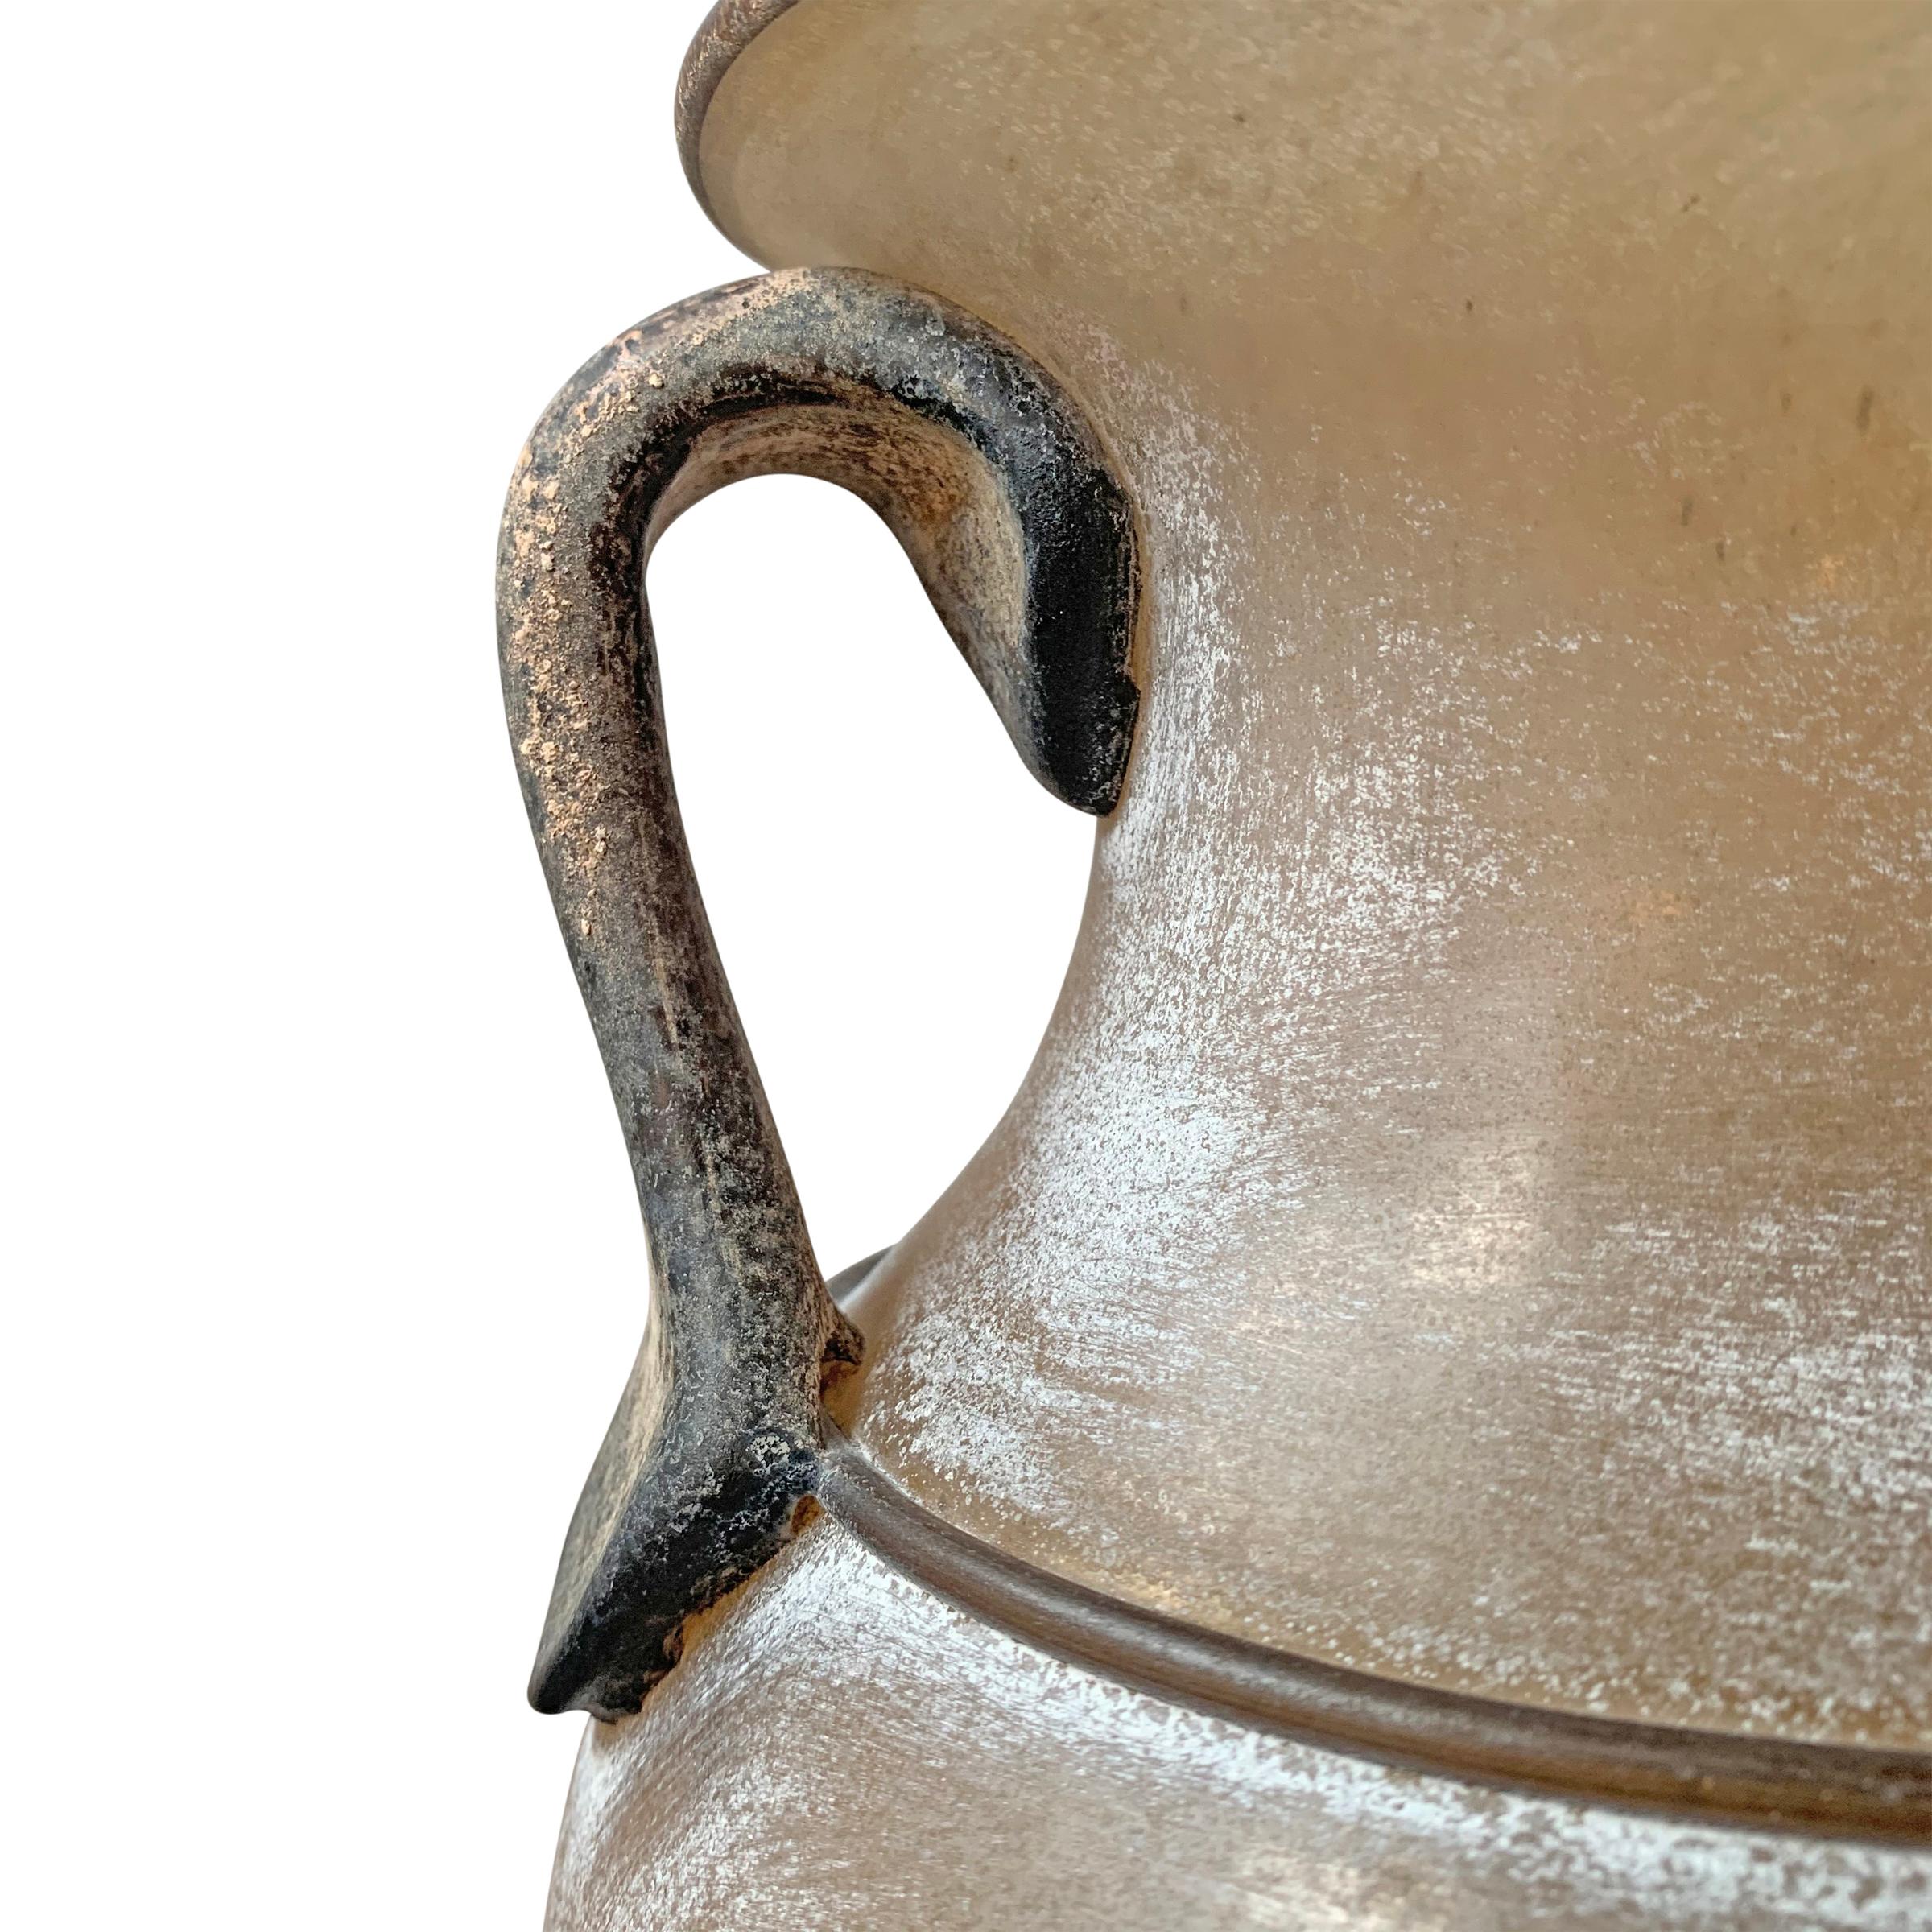 greek amphora vase